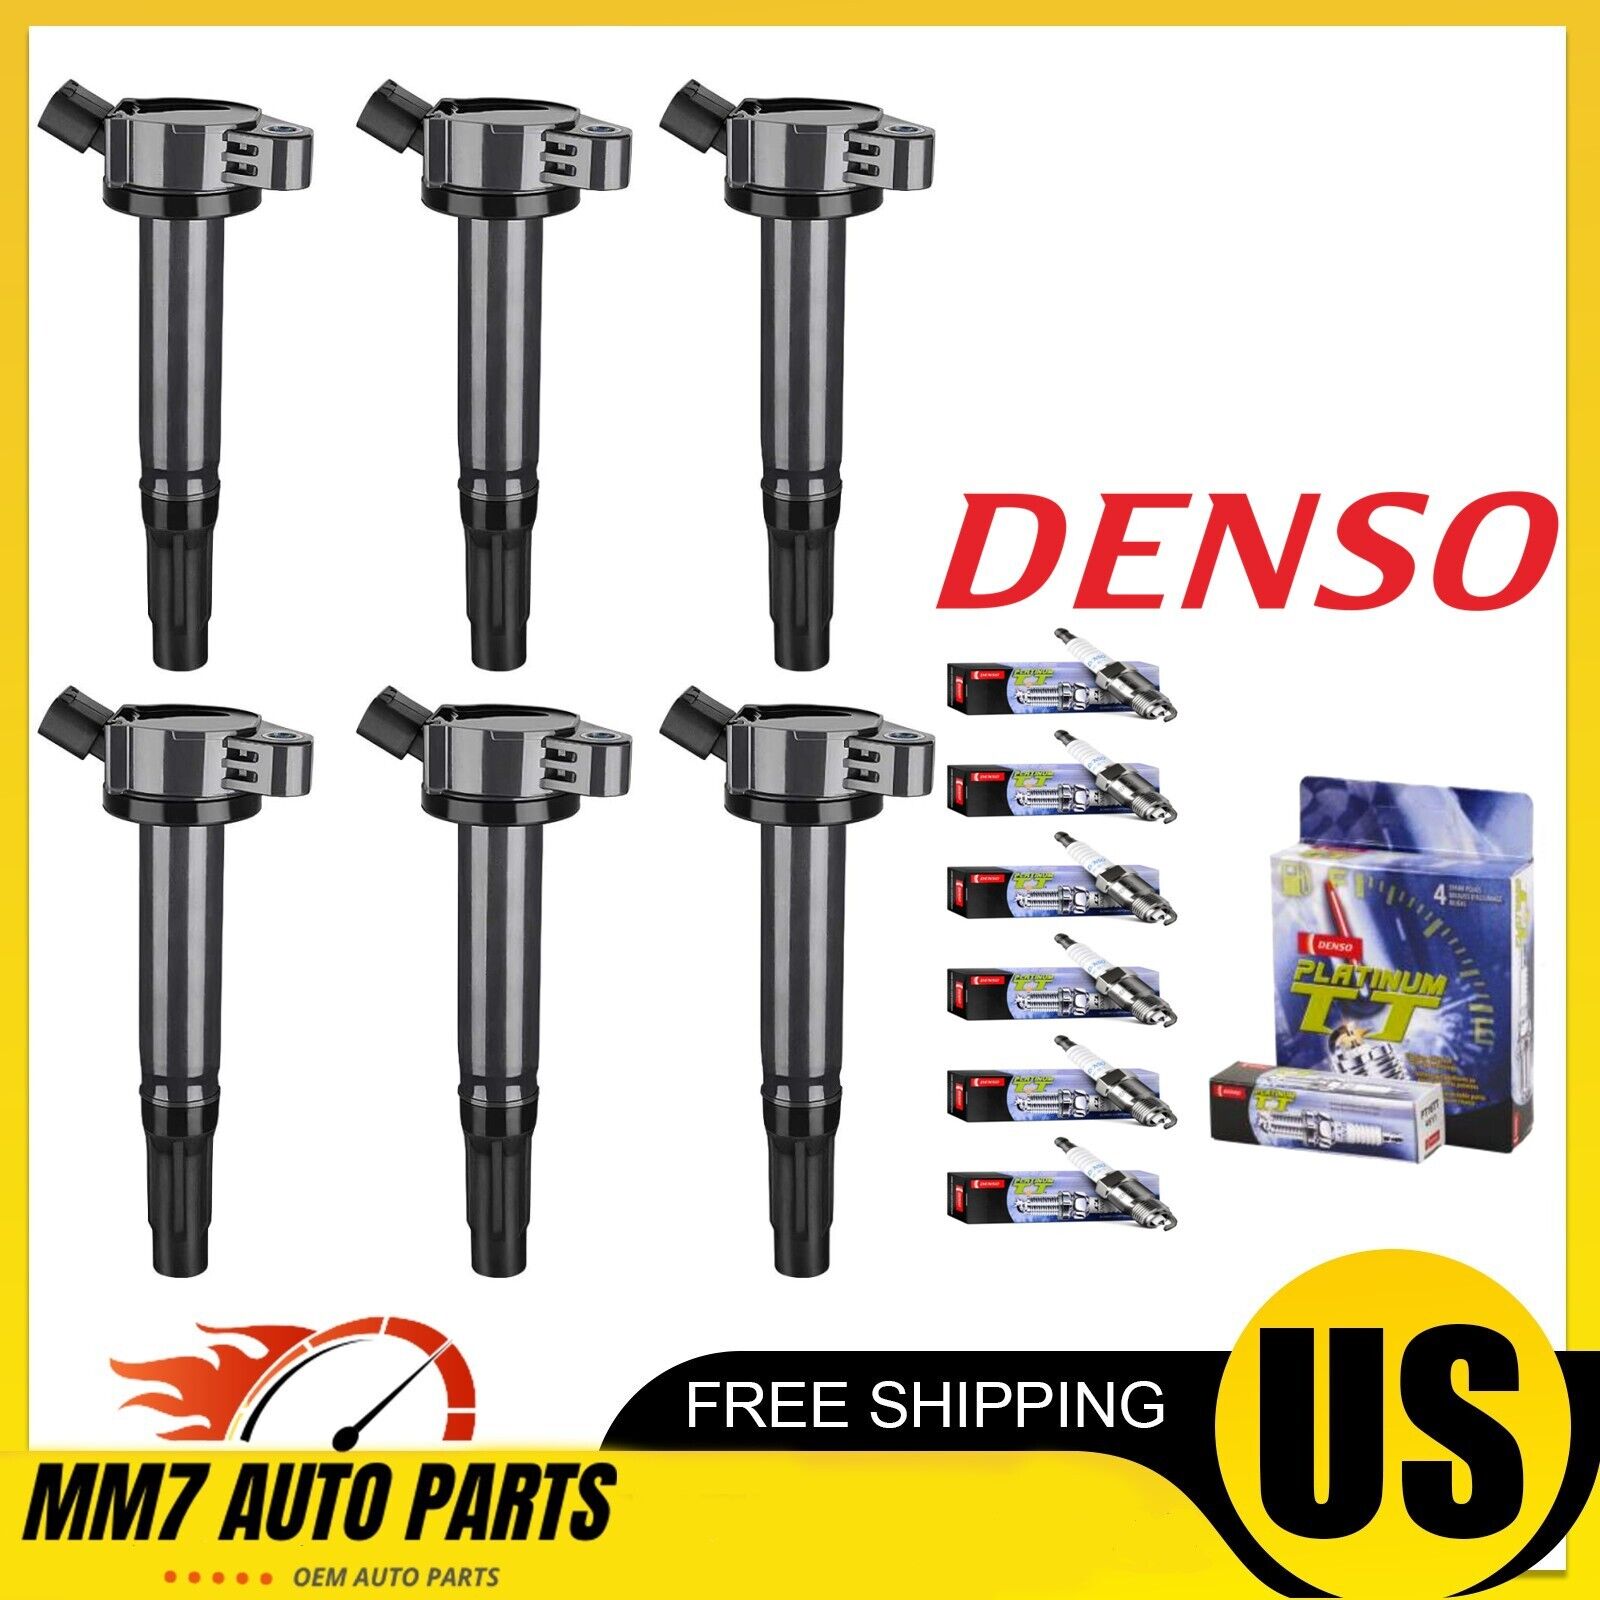 Set of 6 Denso Platinum TT Spark Plug + 6 Ignition Coil For Toyota Lexus Camry